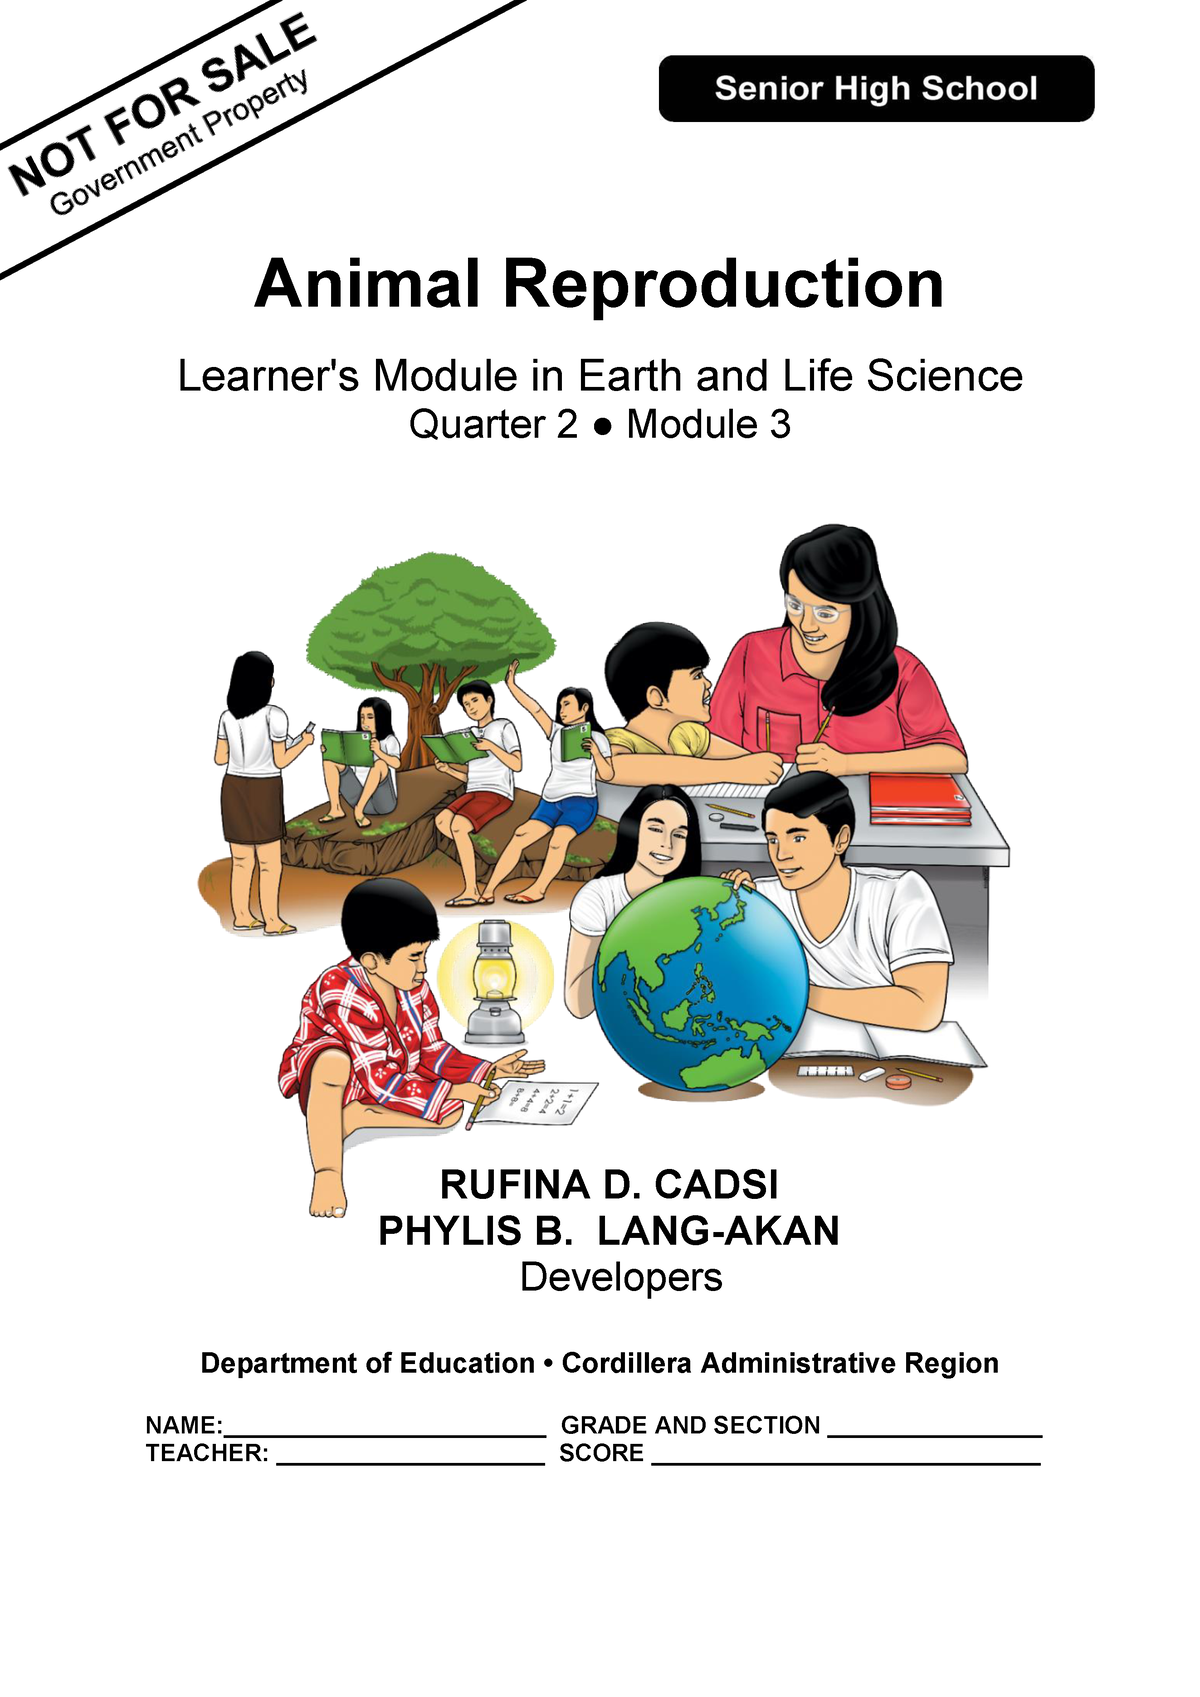 ELS11 12 q2mod3 animal-reproduction cadsi lang-akan bgo v0 - Animal  Reproduction Learner's Module in - Studocu